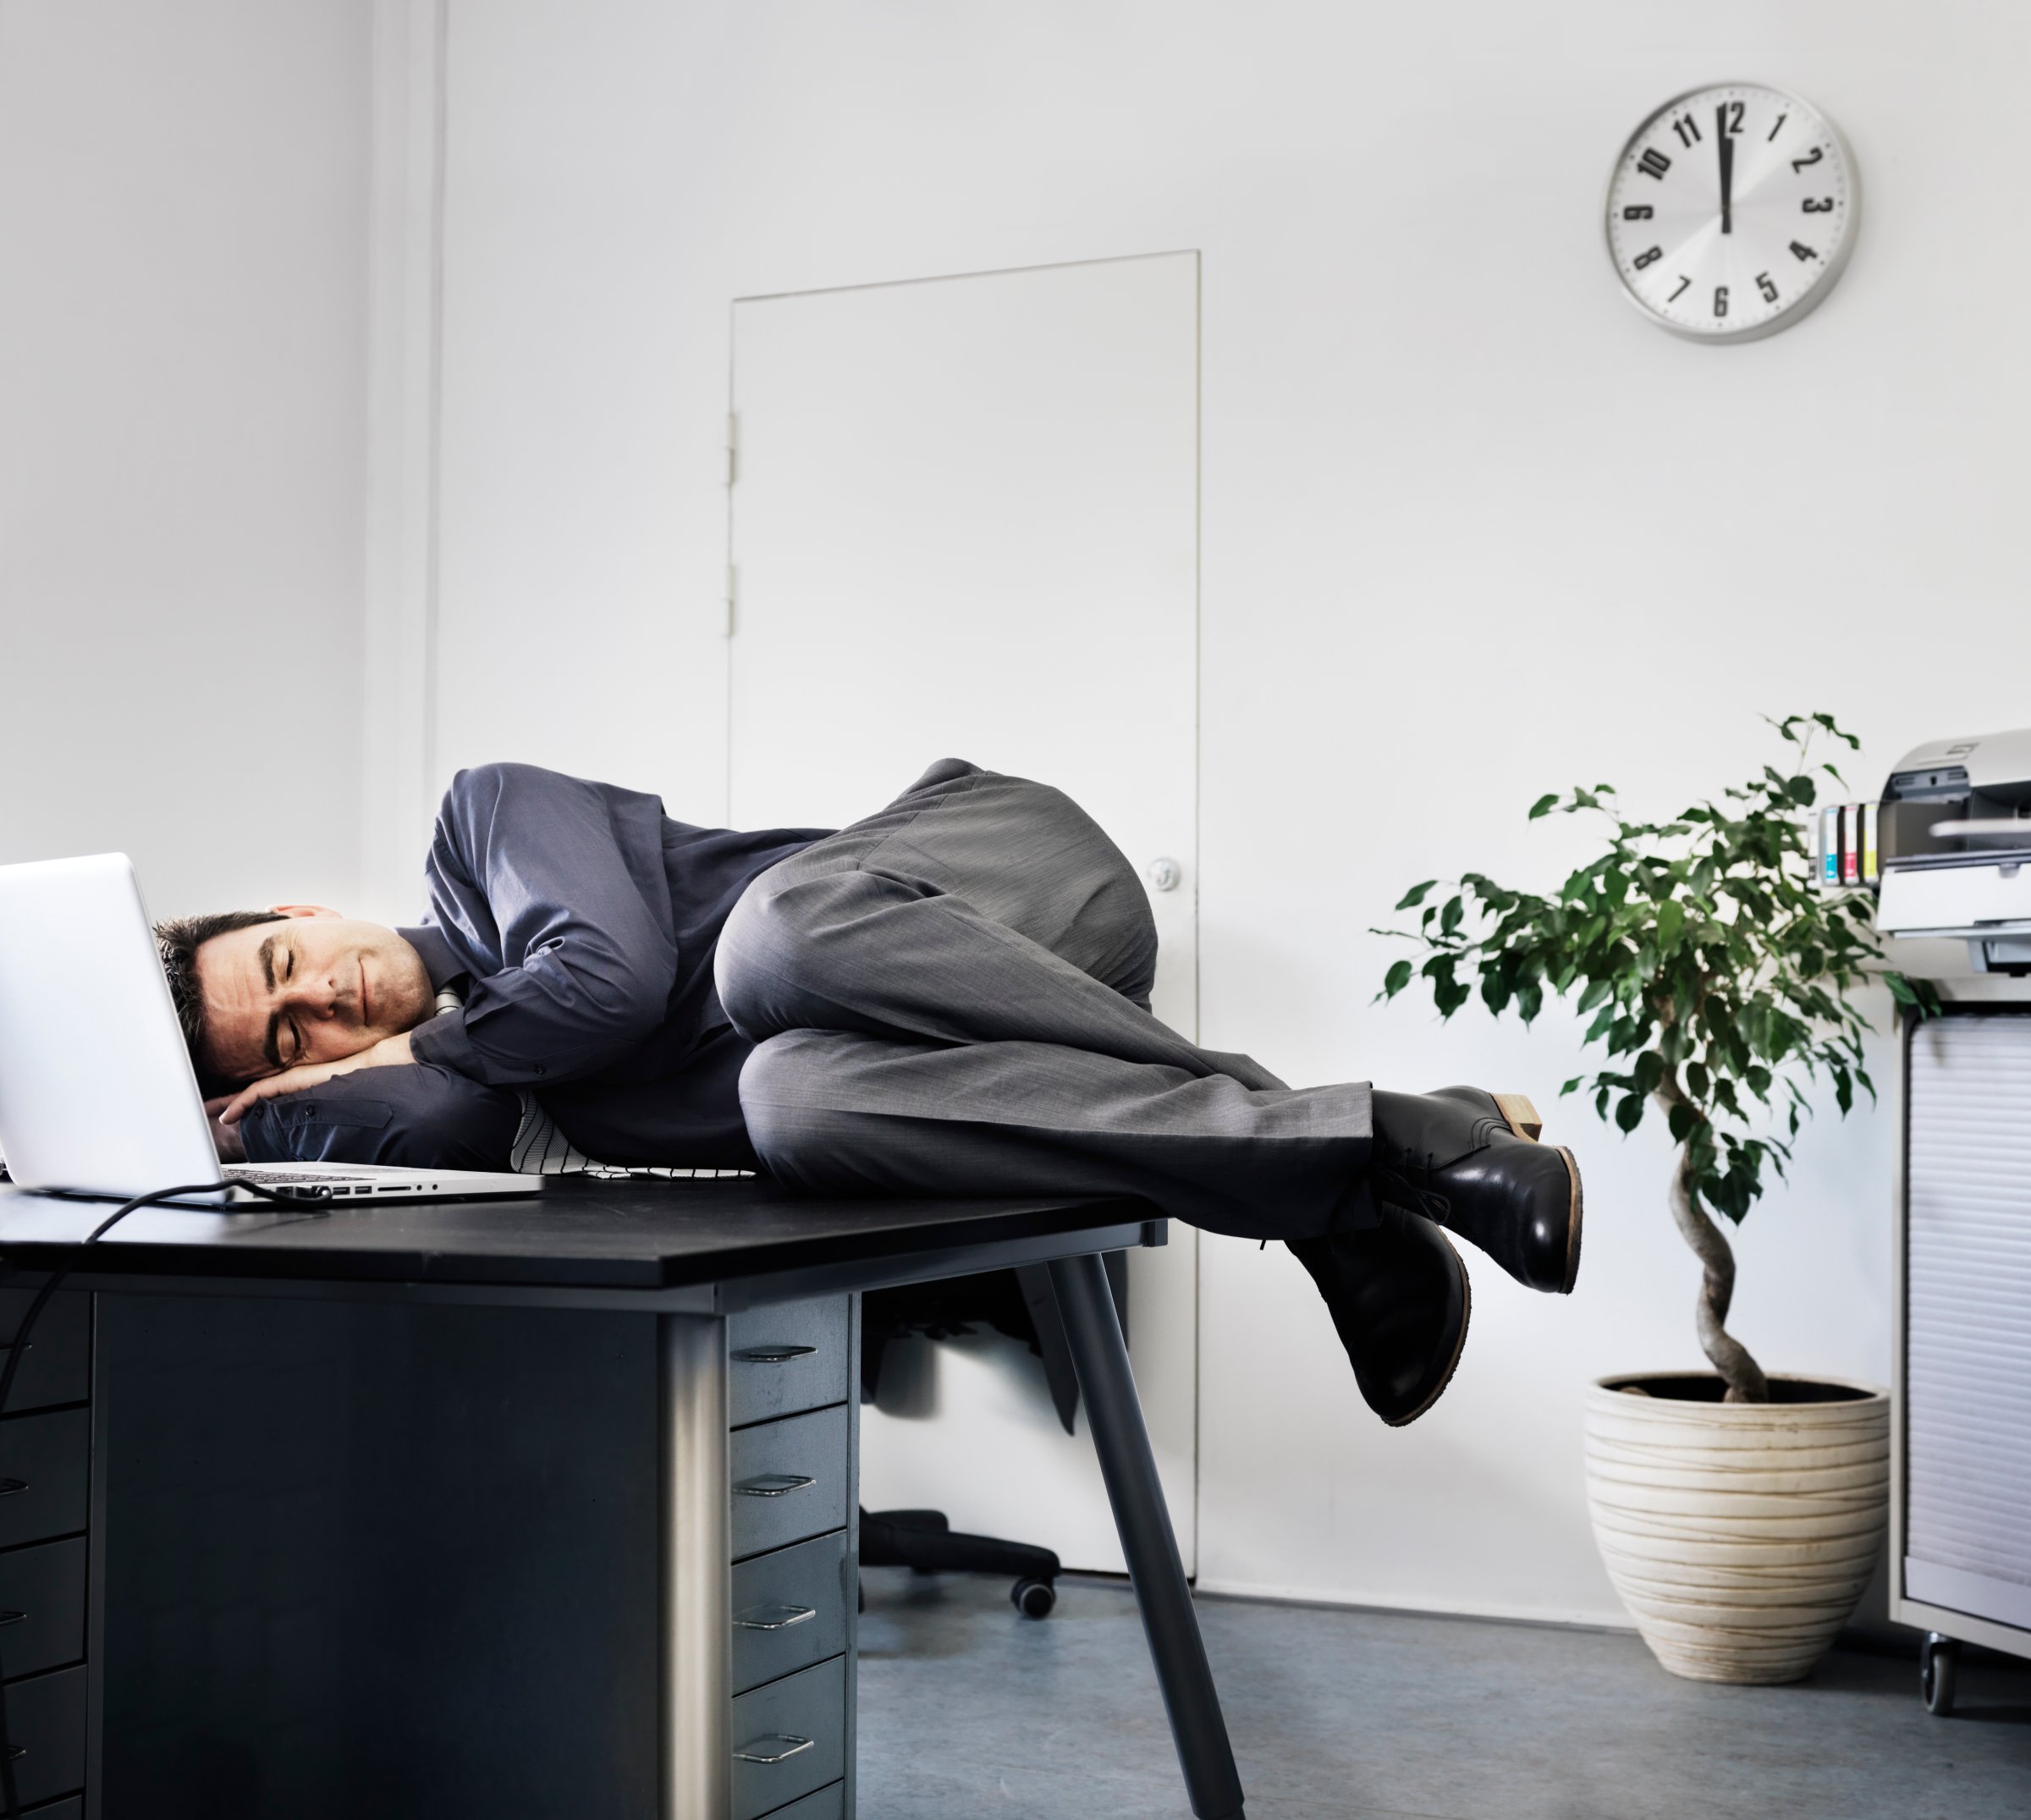 Businessman asleep on his office desk